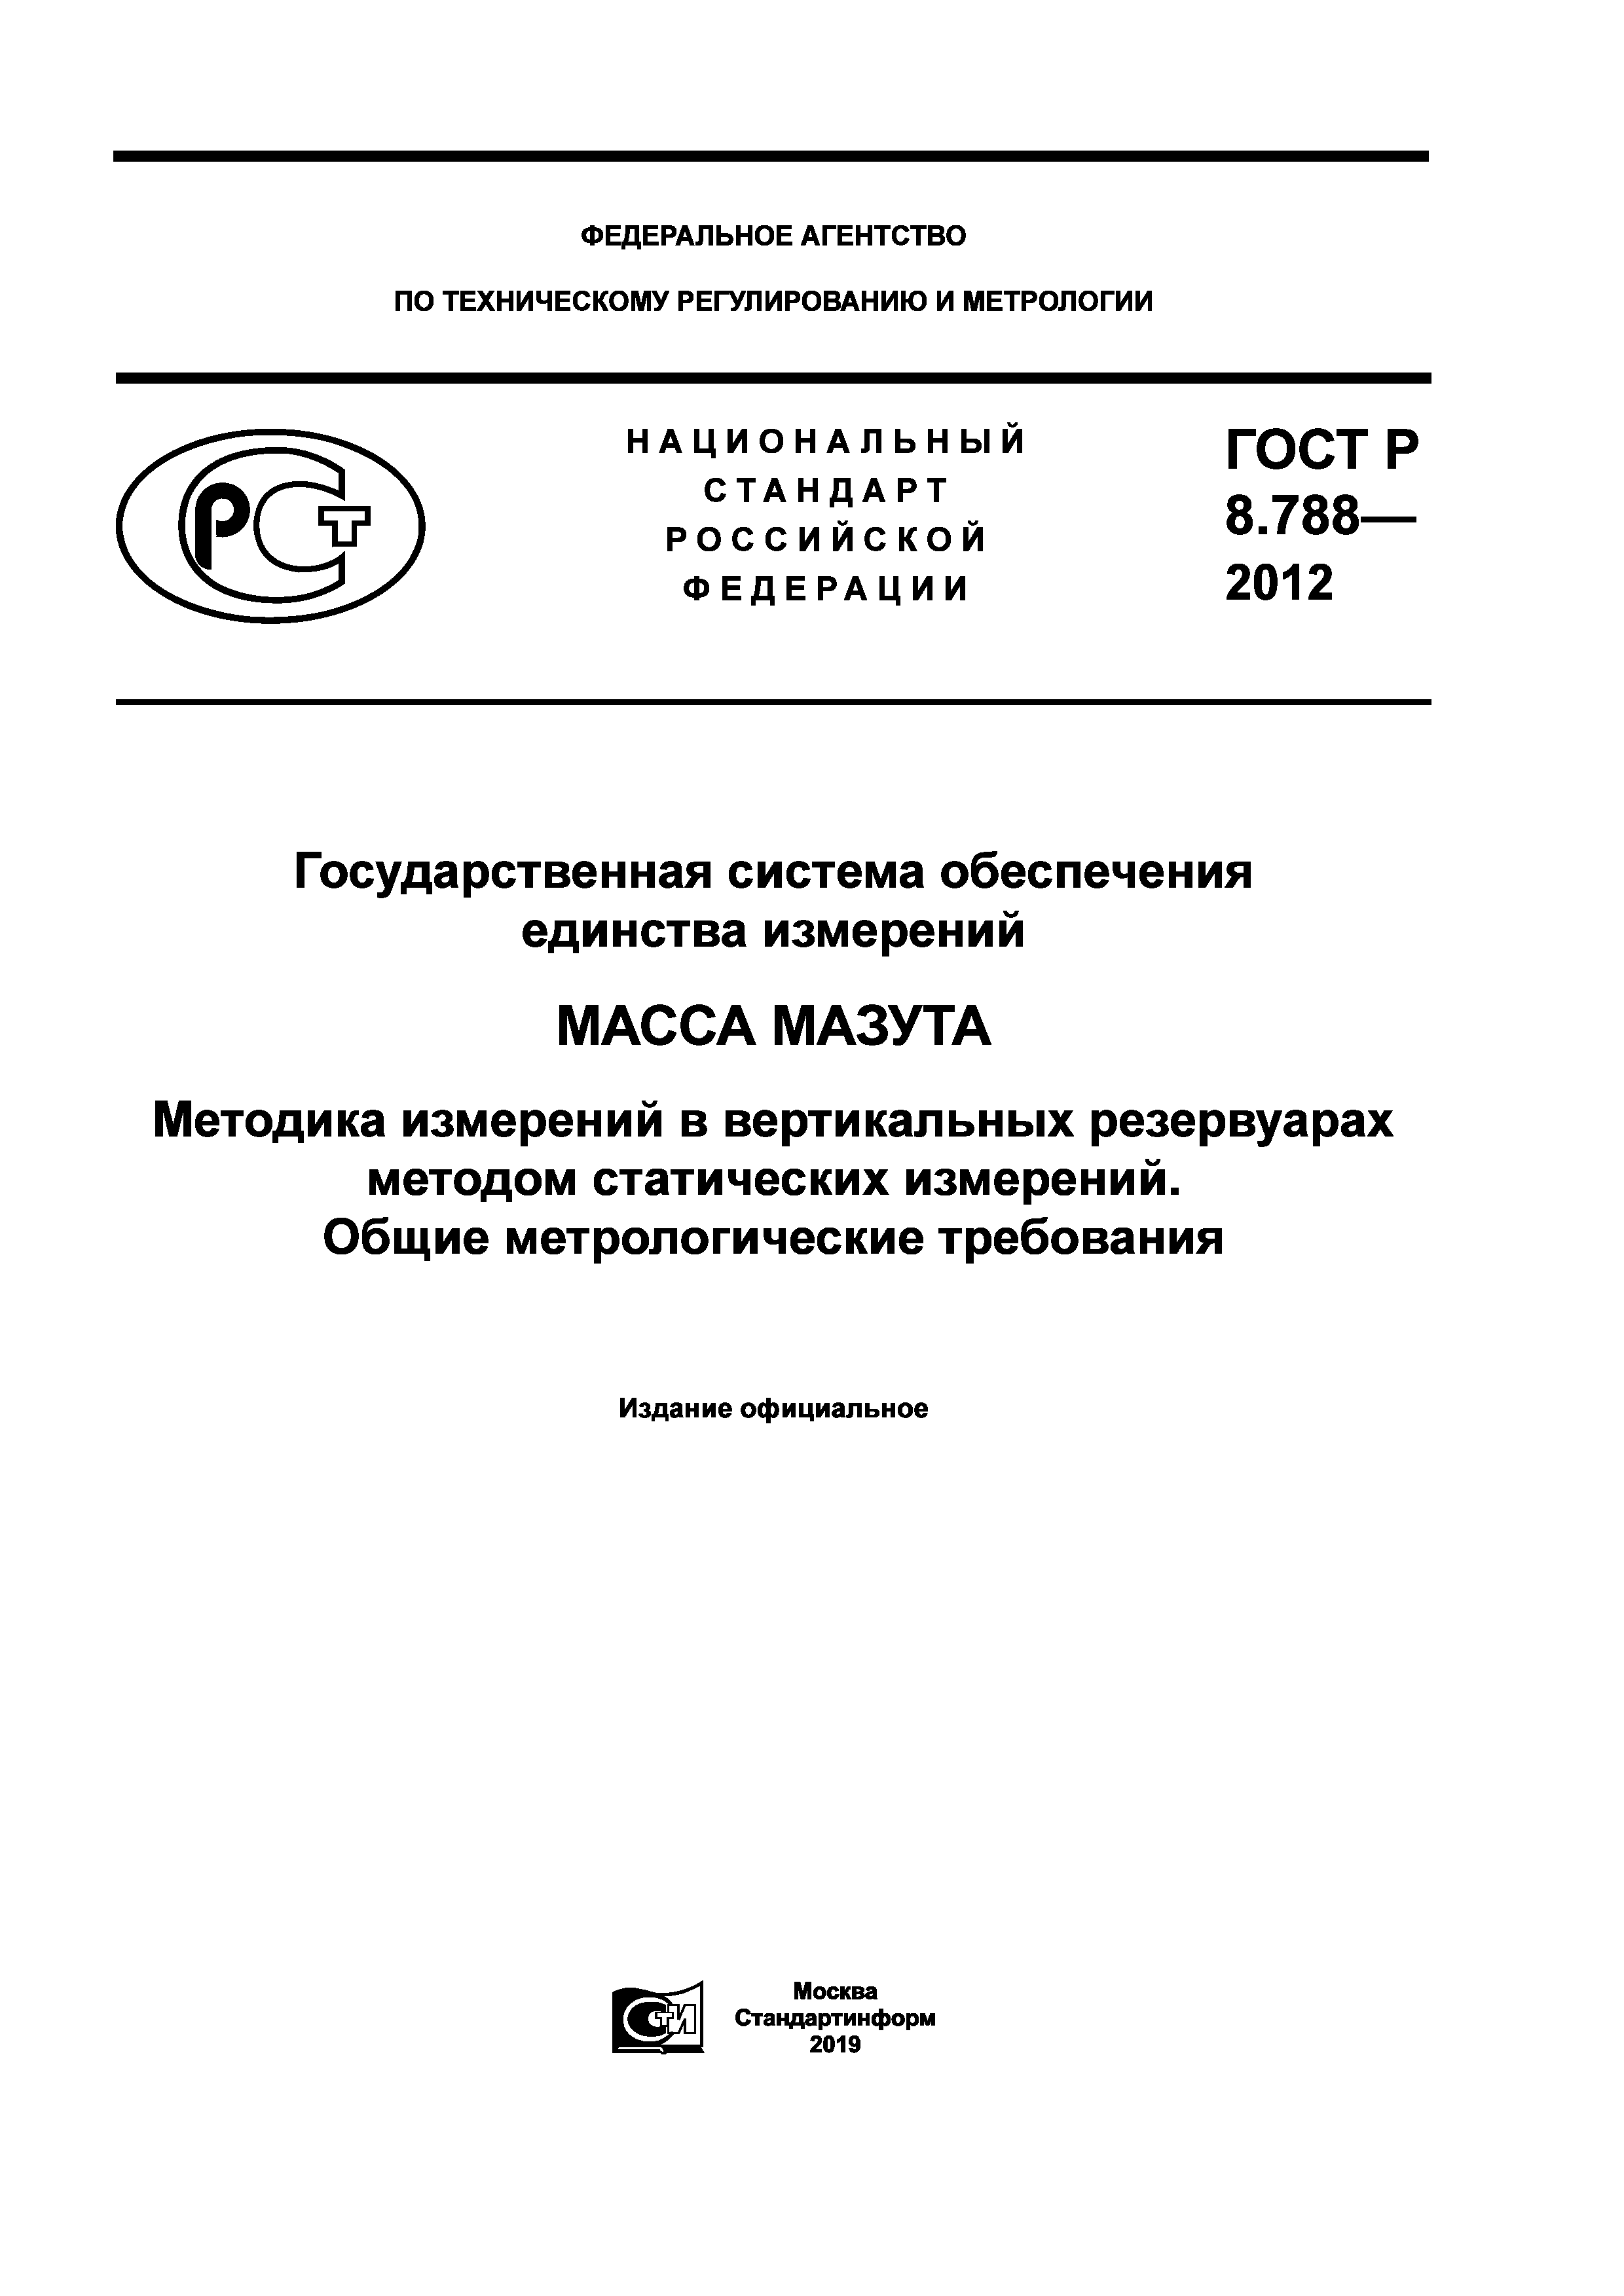 ГОСТ Р 8.788-2012